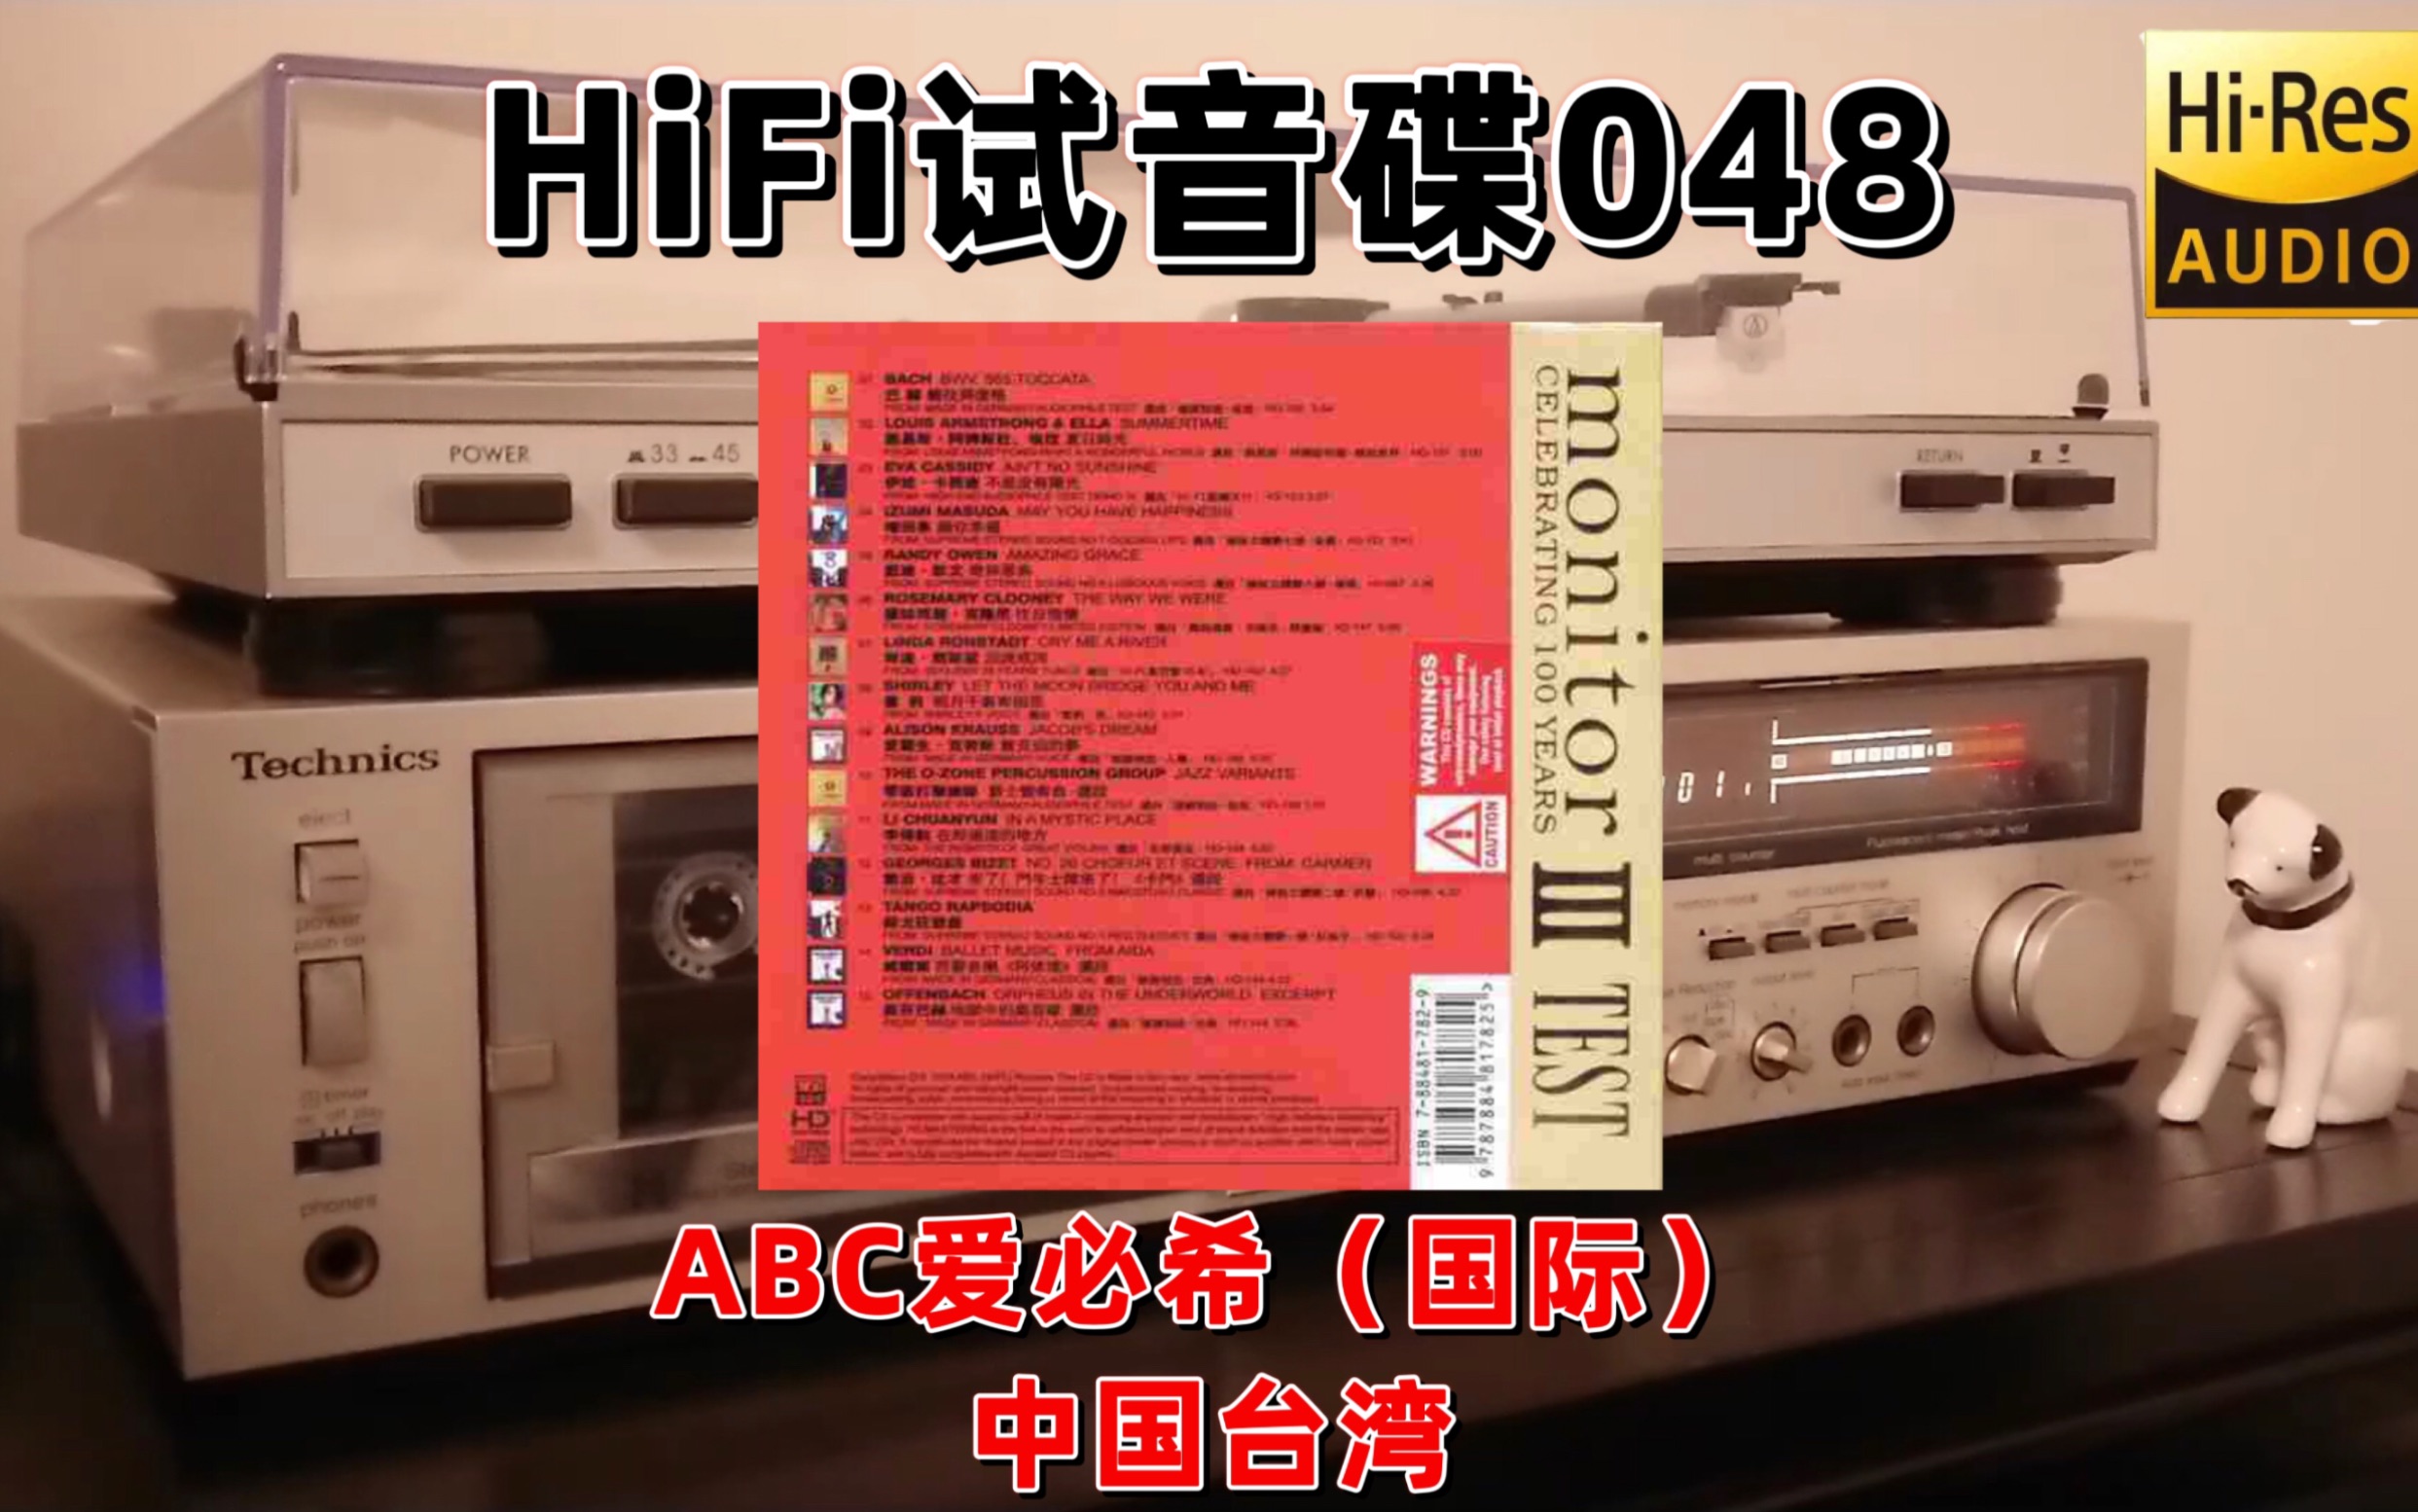 #HiFi试音碟048#LEGENDARY SOUND III 监听3号 2013 发烧碟 示范碟 测试碟 煲机碟 试机碟